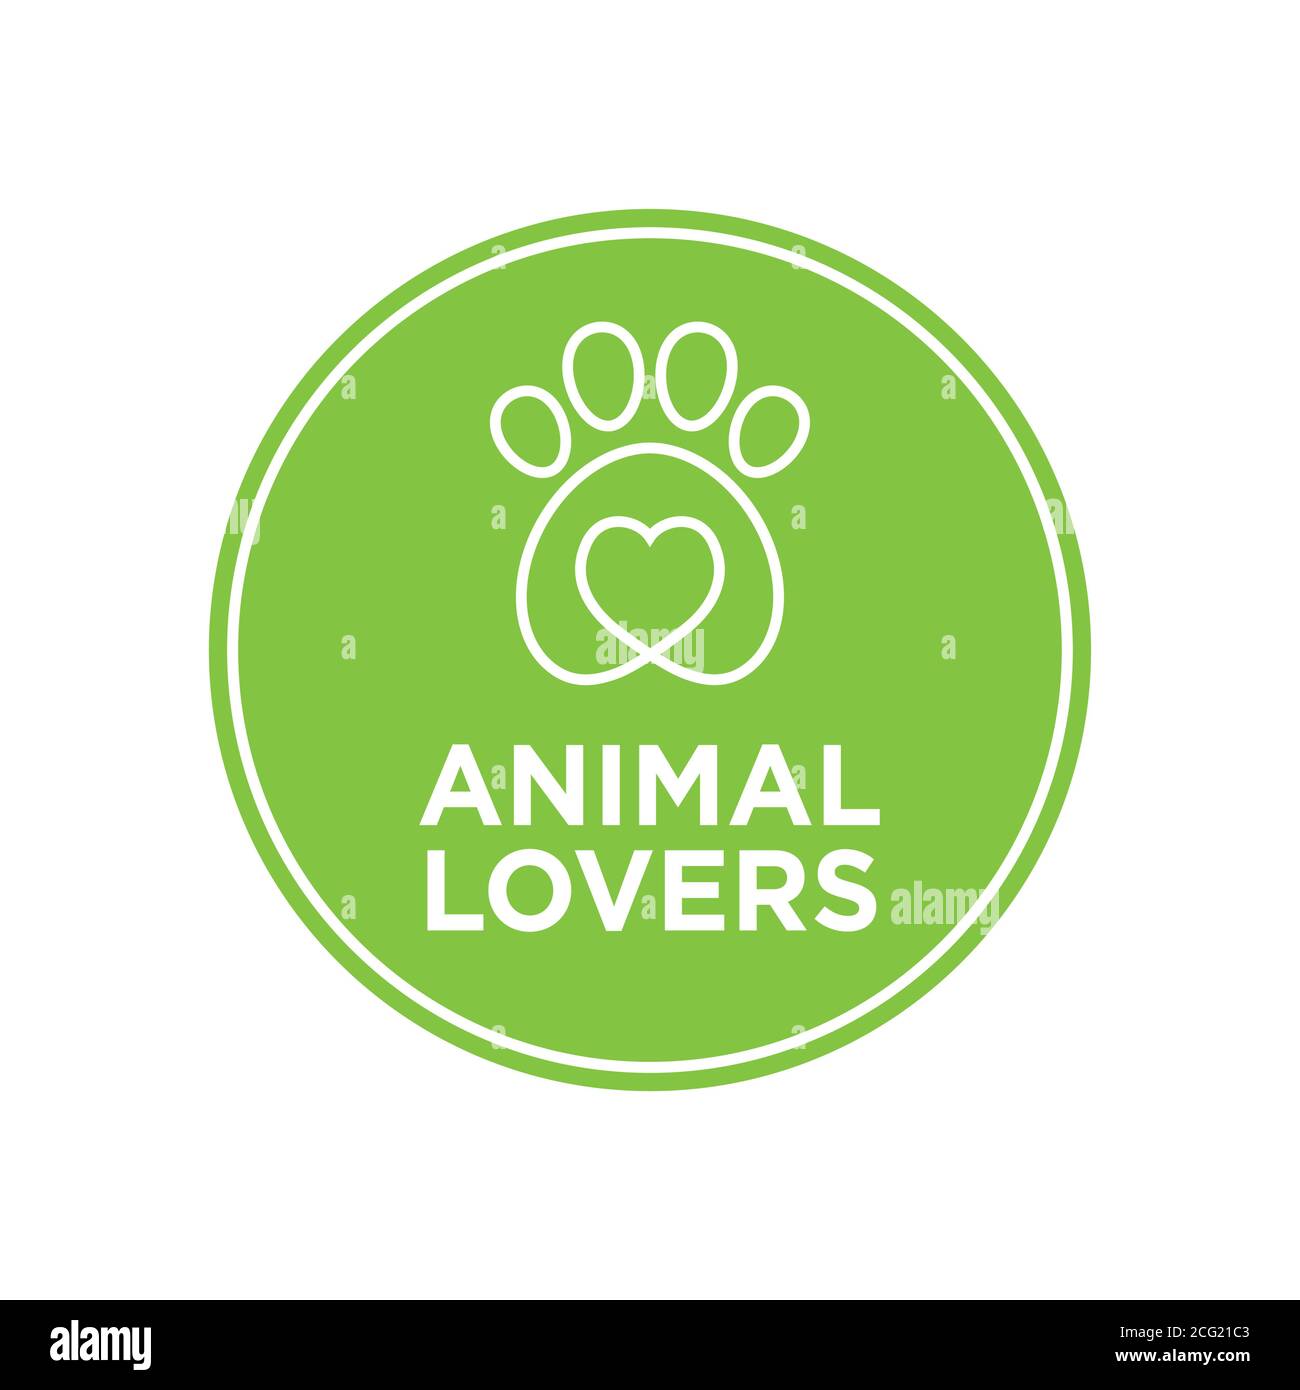 Animal lovers symbol. Green round icon Stock Vector